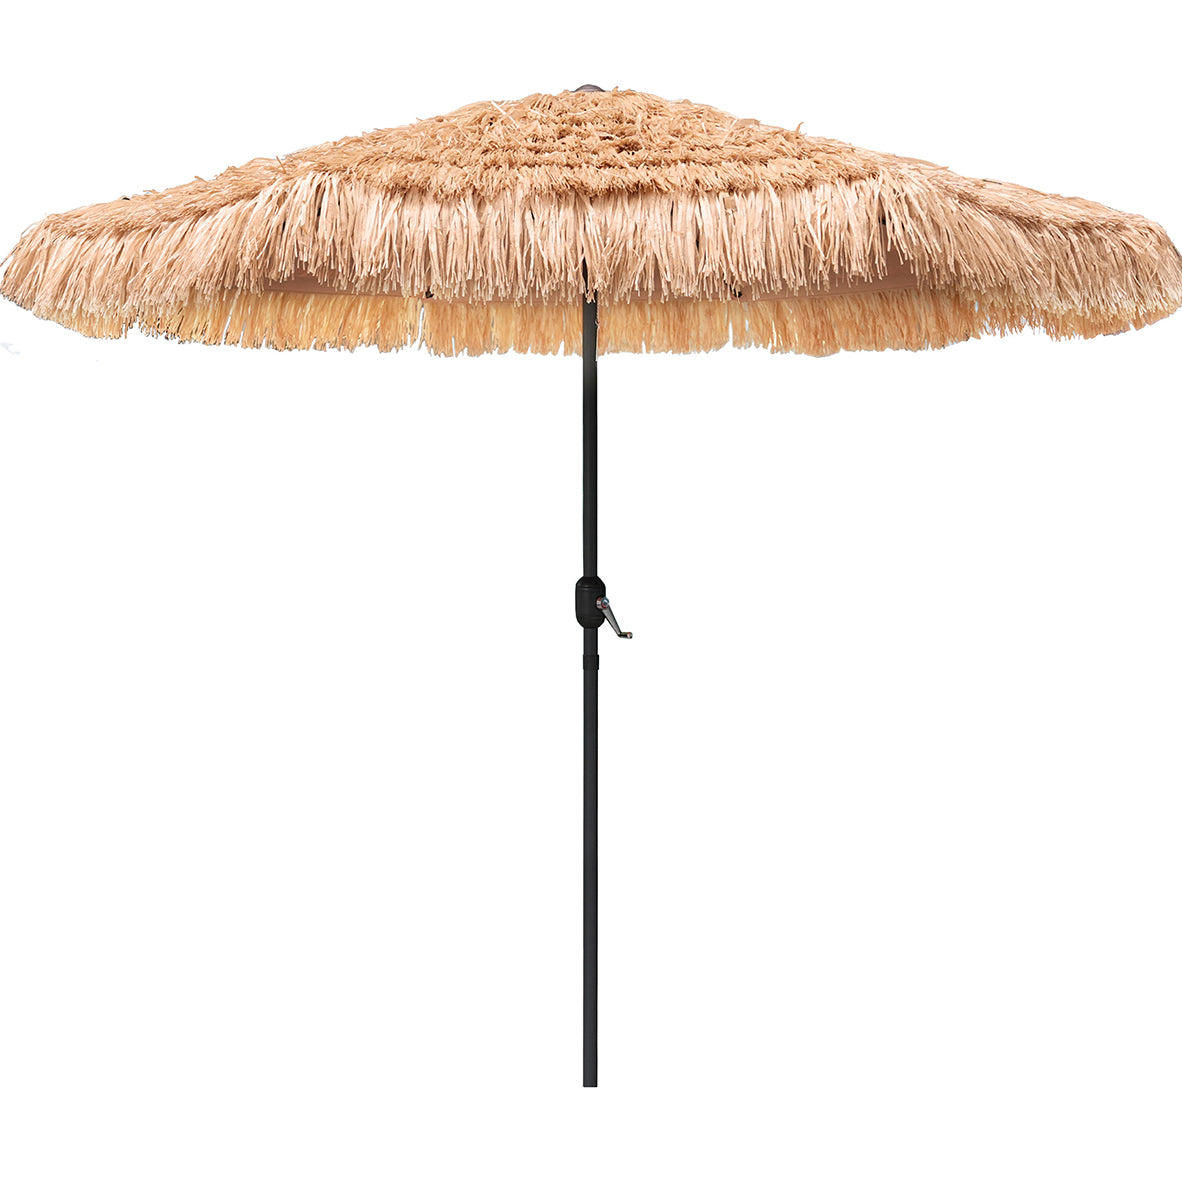 AMMSUN 9ft Hula Thatched Tiki Umbrella Hawaiian Style Patio Umbrella